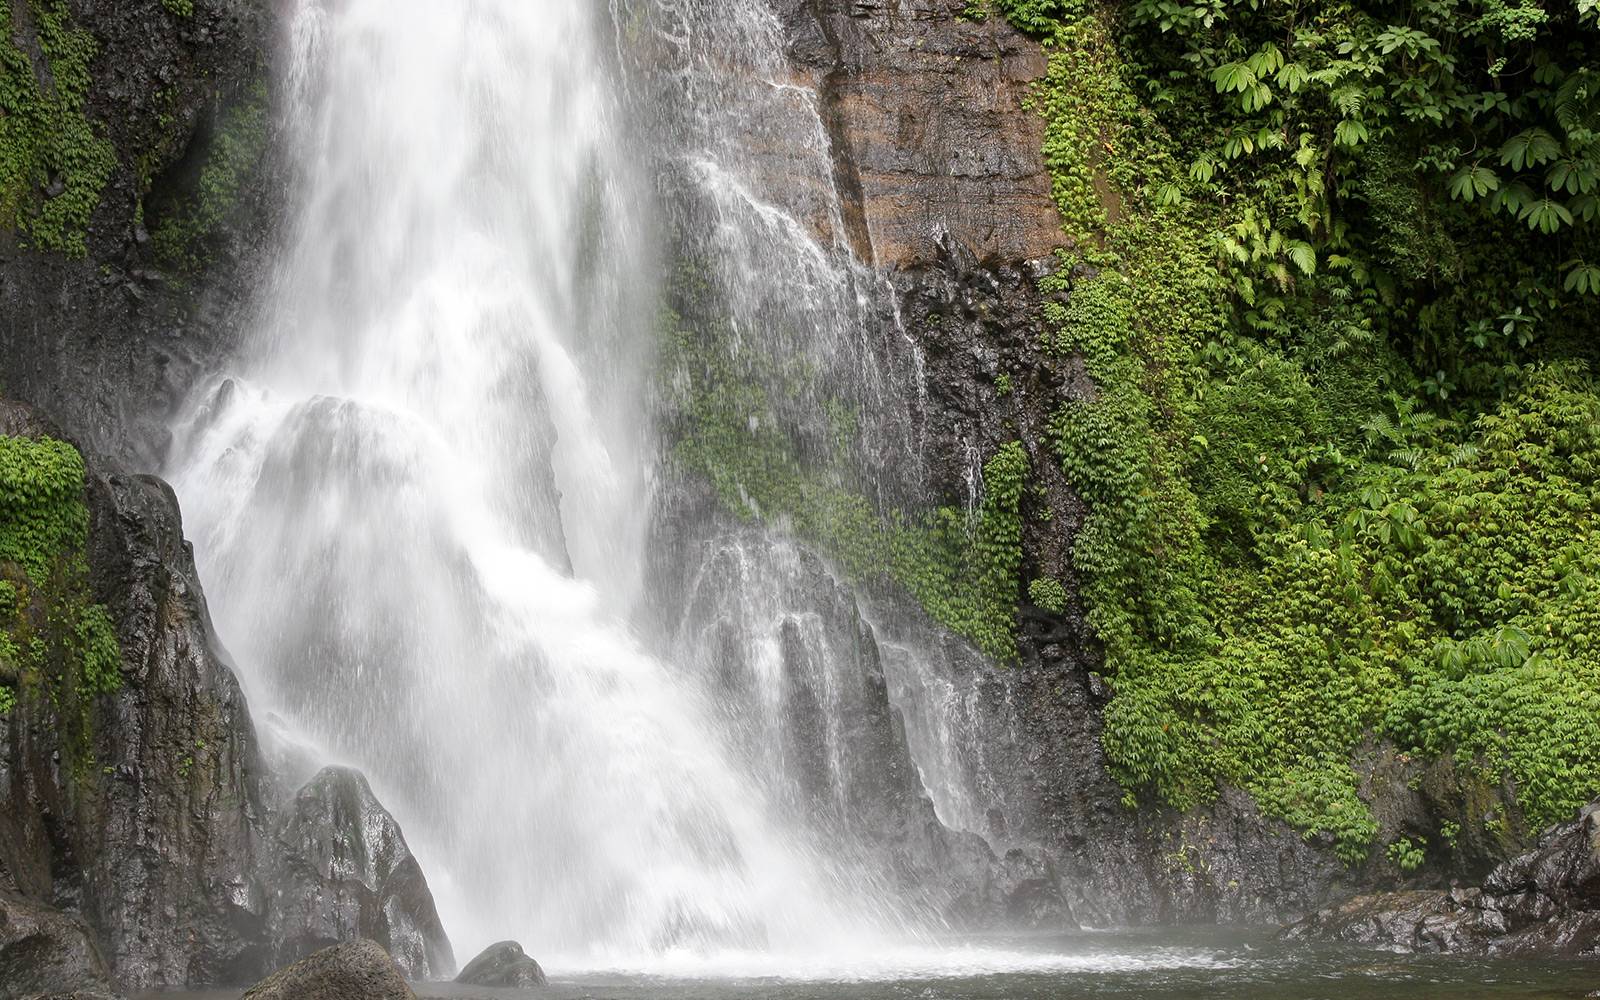 Водопад гит гит — самый посещаемый водопад на бали, индонезия